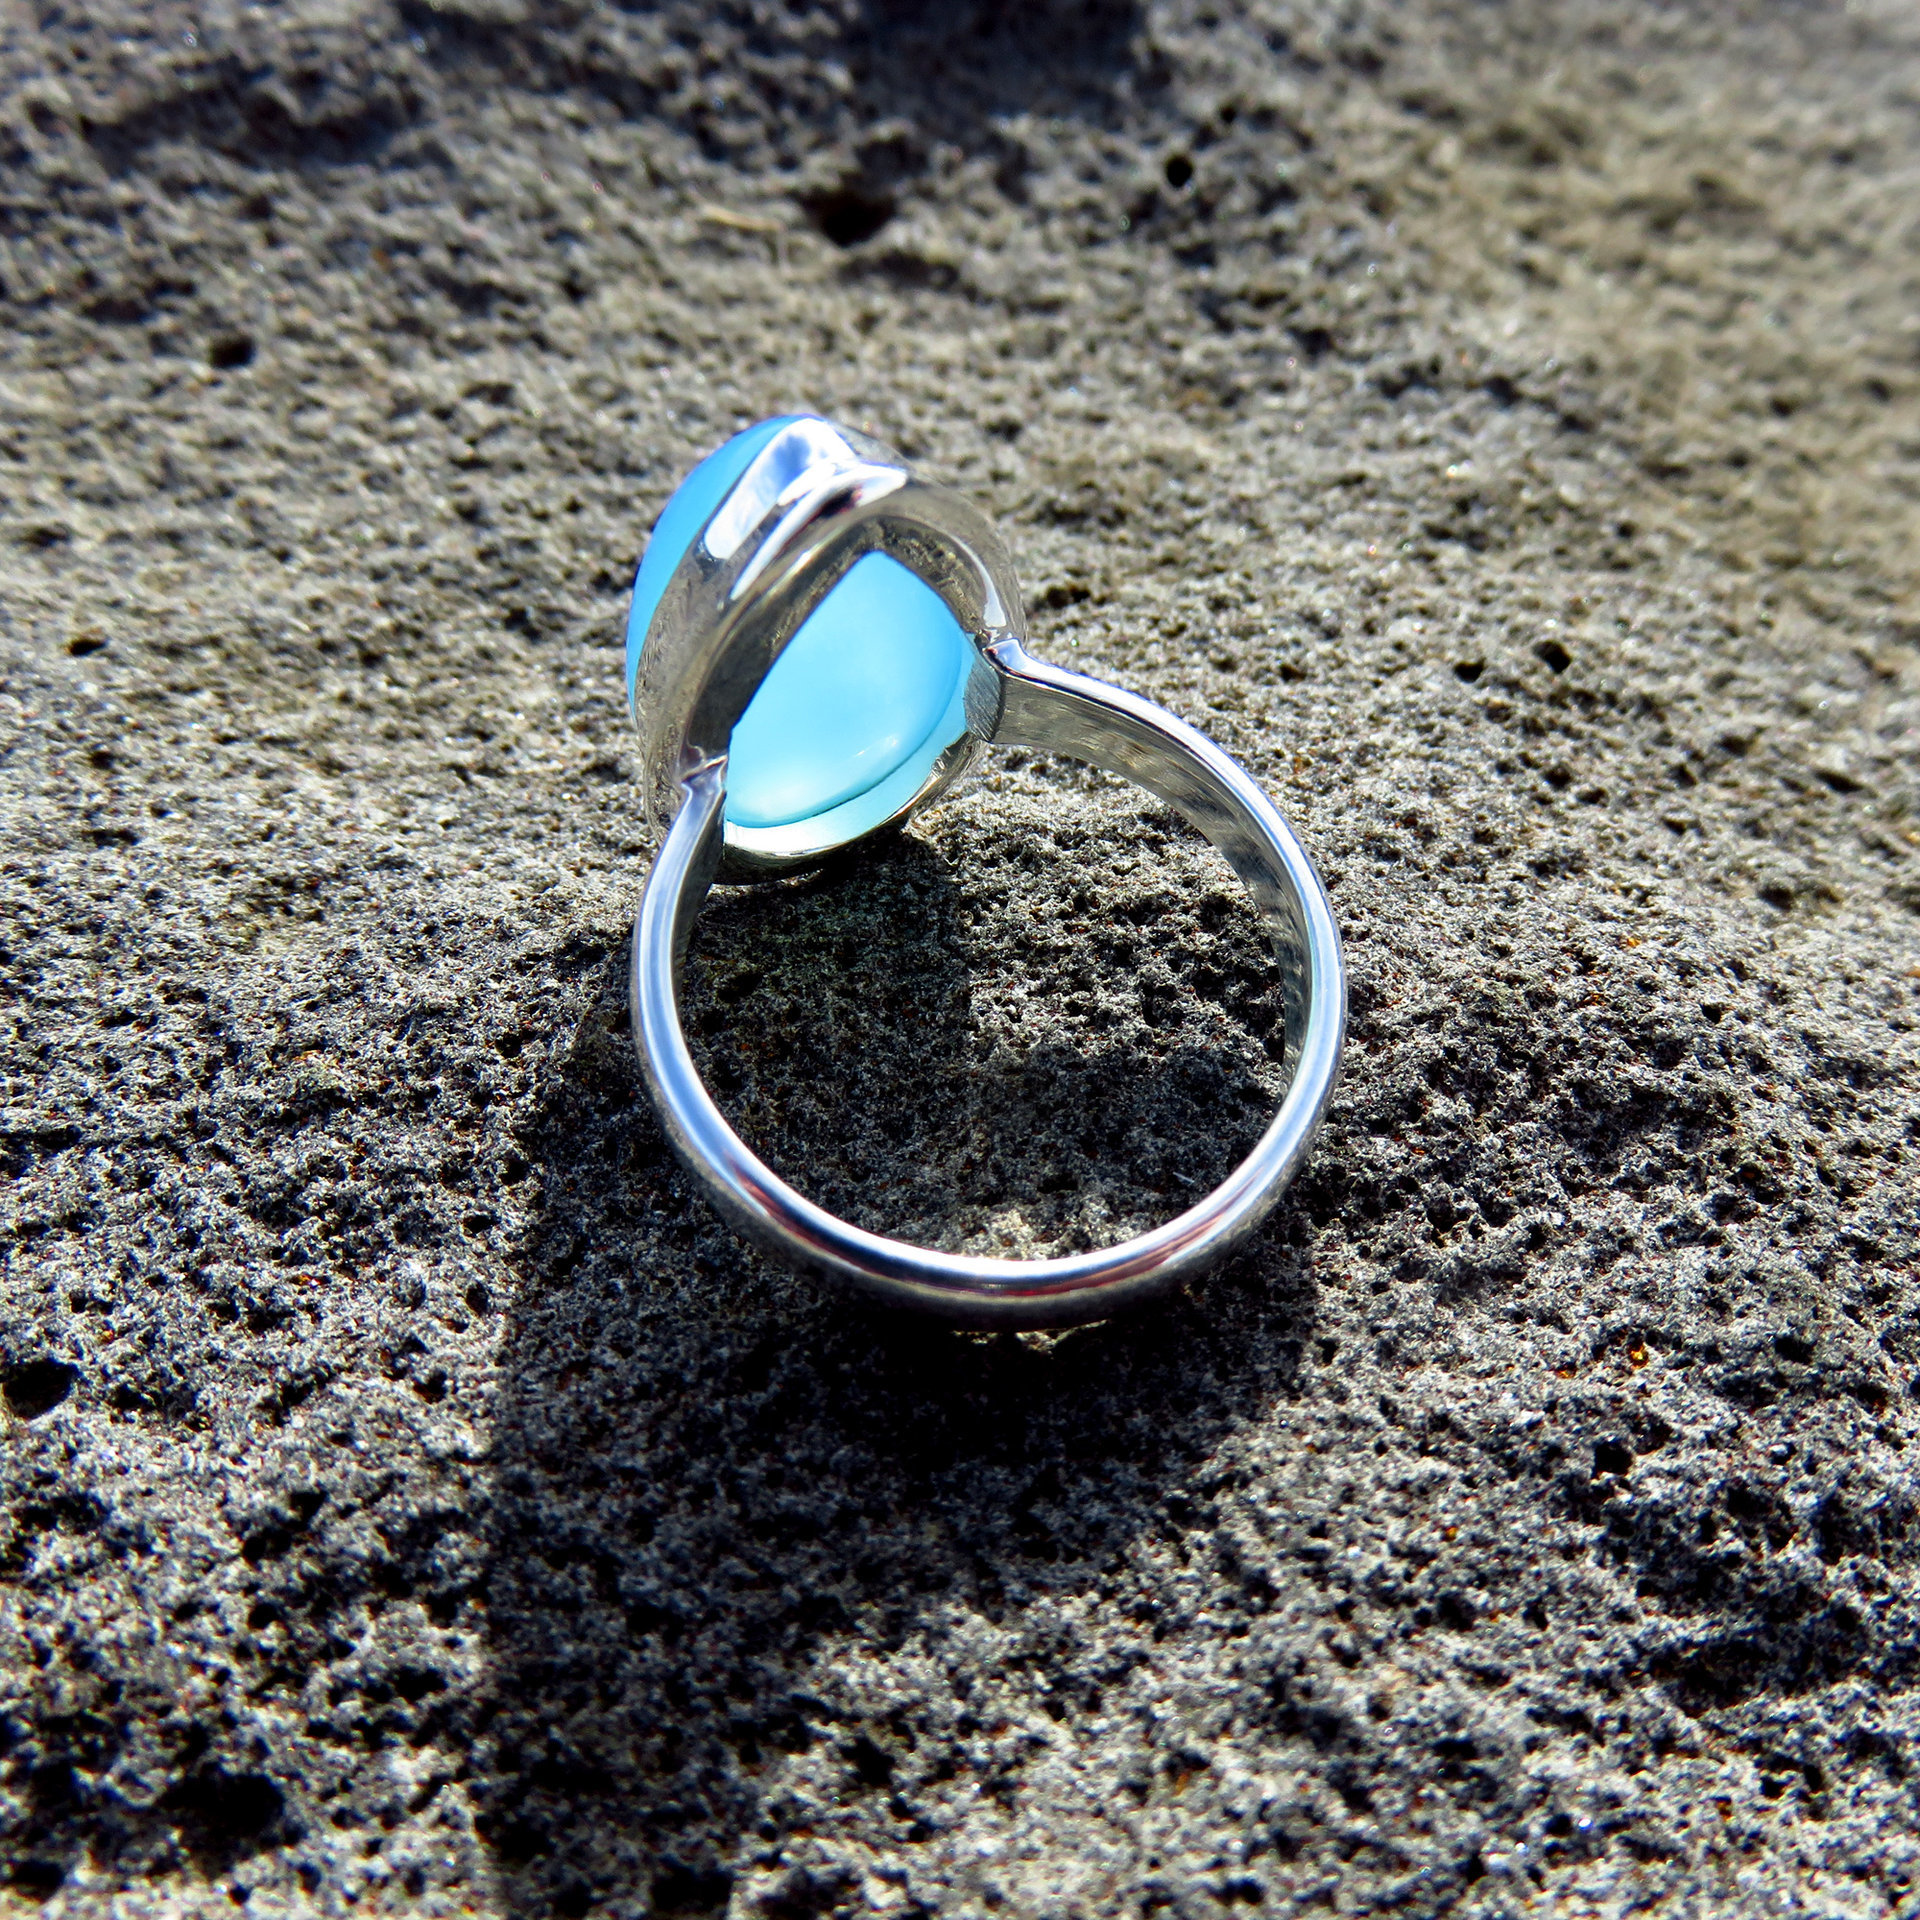 Chalcedony Ring Size 7, Blue Teardrop Gemstone, 925 Sterling Silver